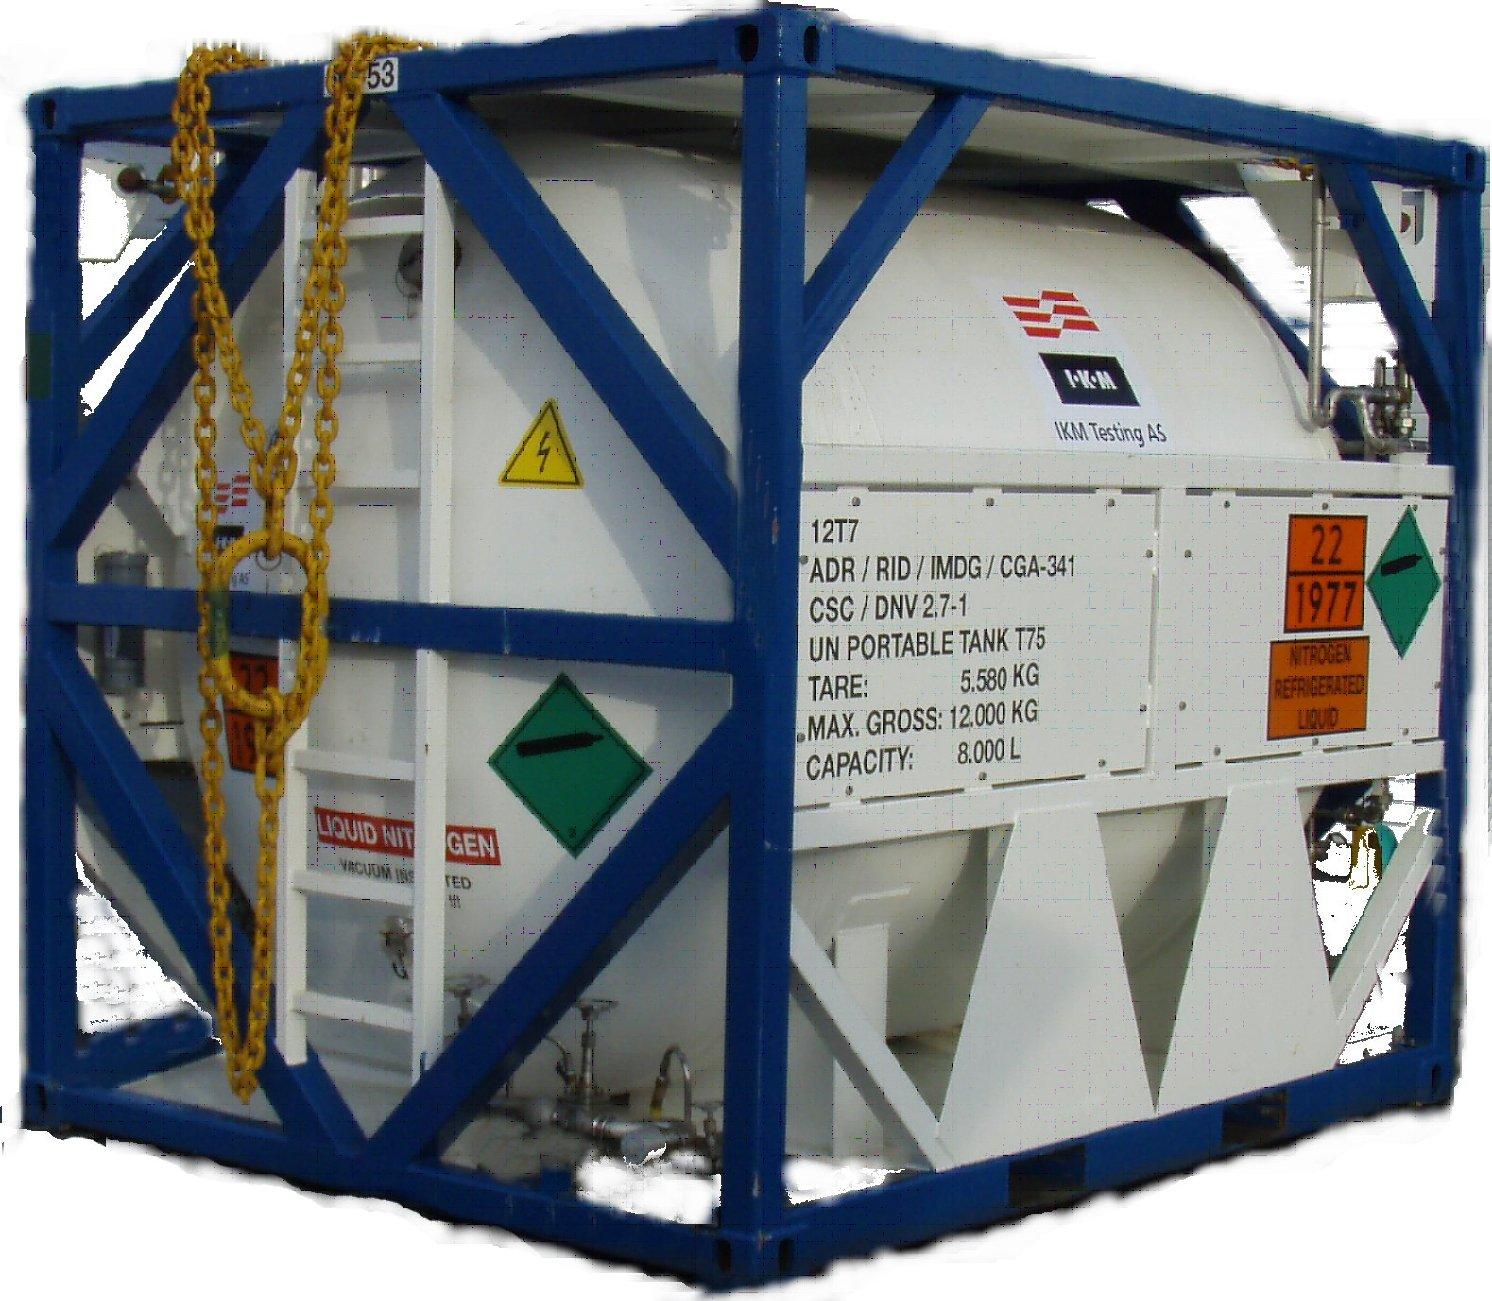 Cryogenic Liquid Nitrogen storage tanks